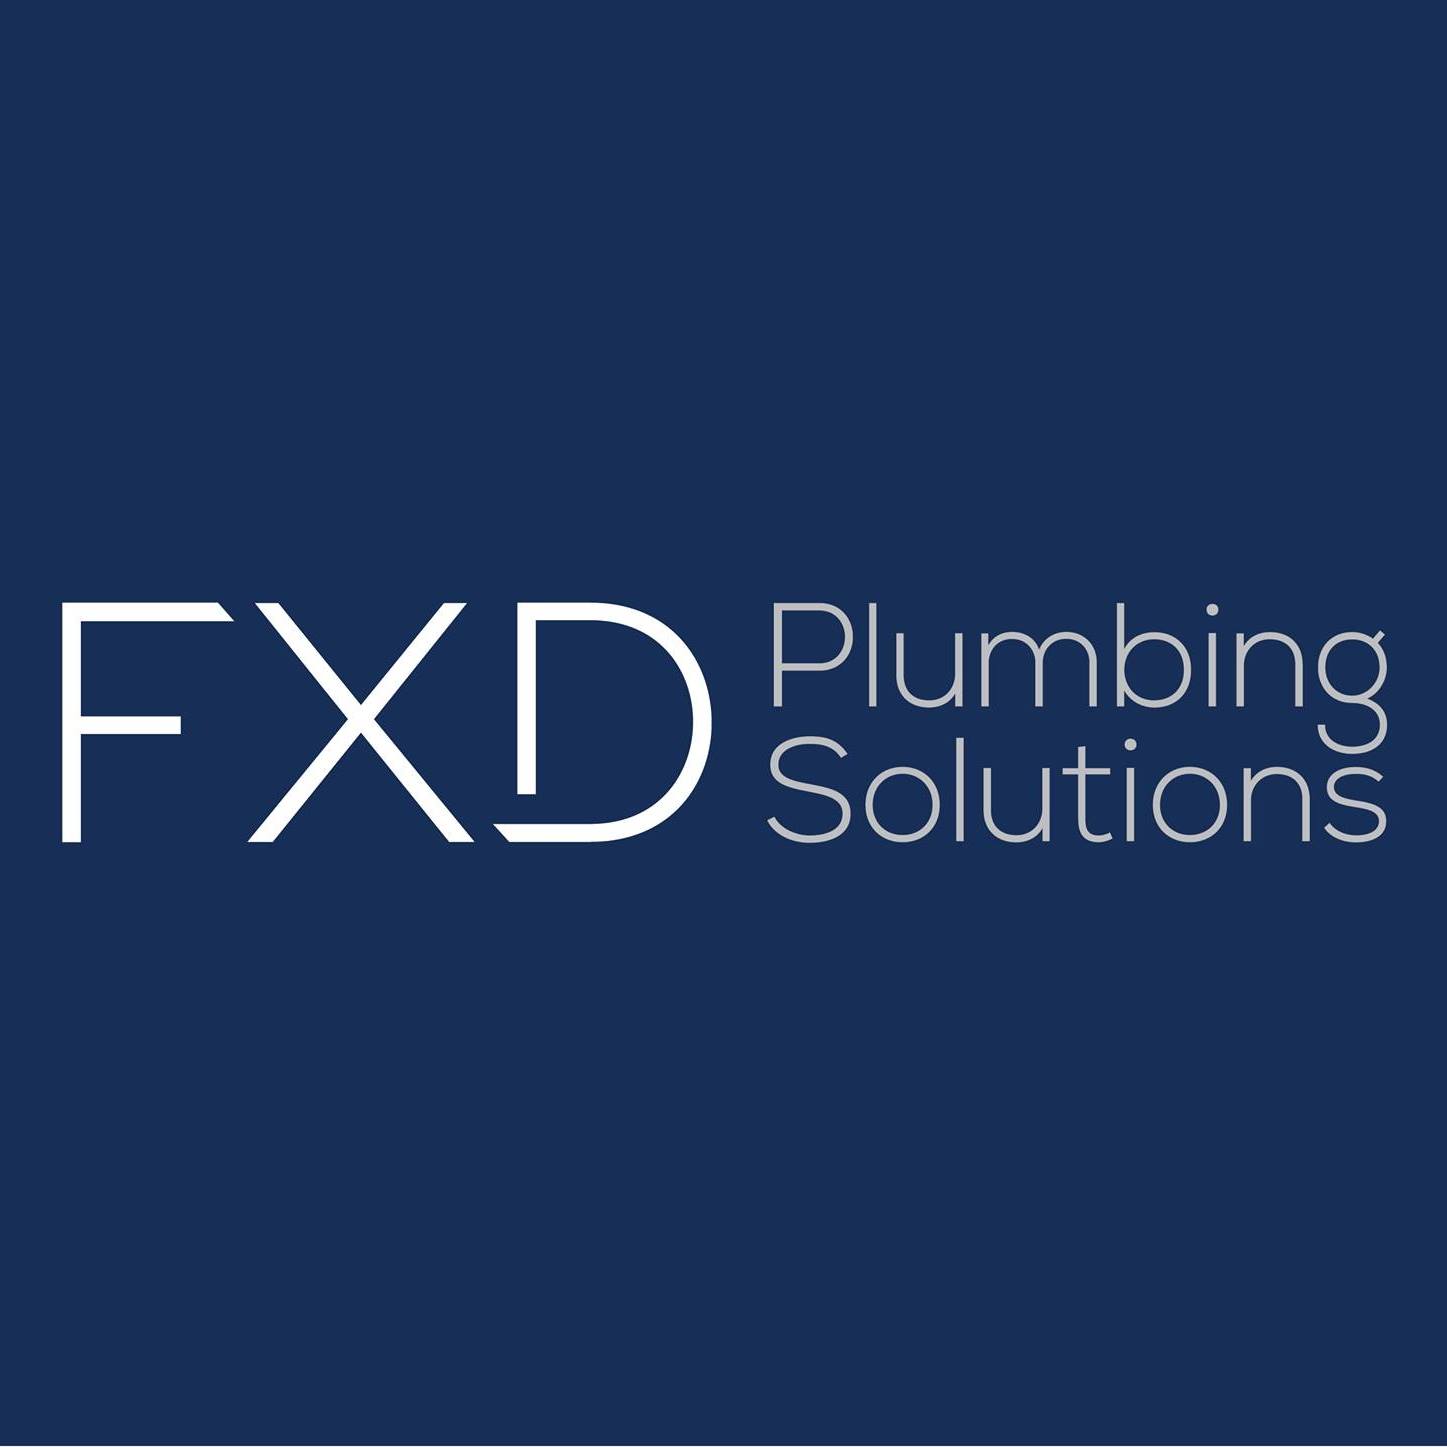 FXD Plumbing Solutions